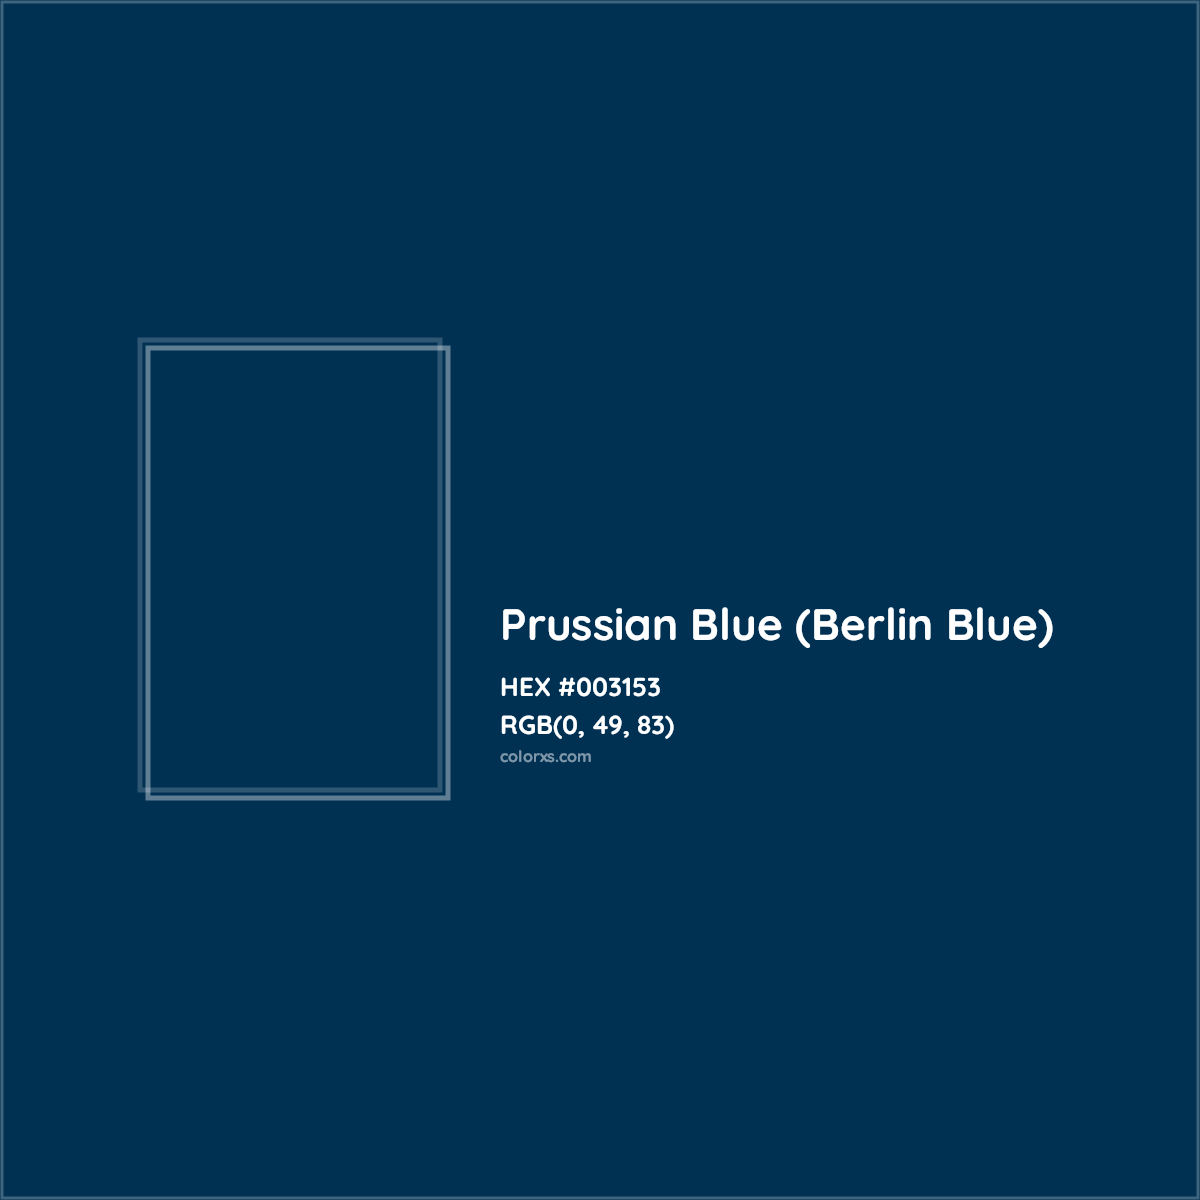 HEX #003153 Prussian Blue (Berlin Blue) Color - Color Code